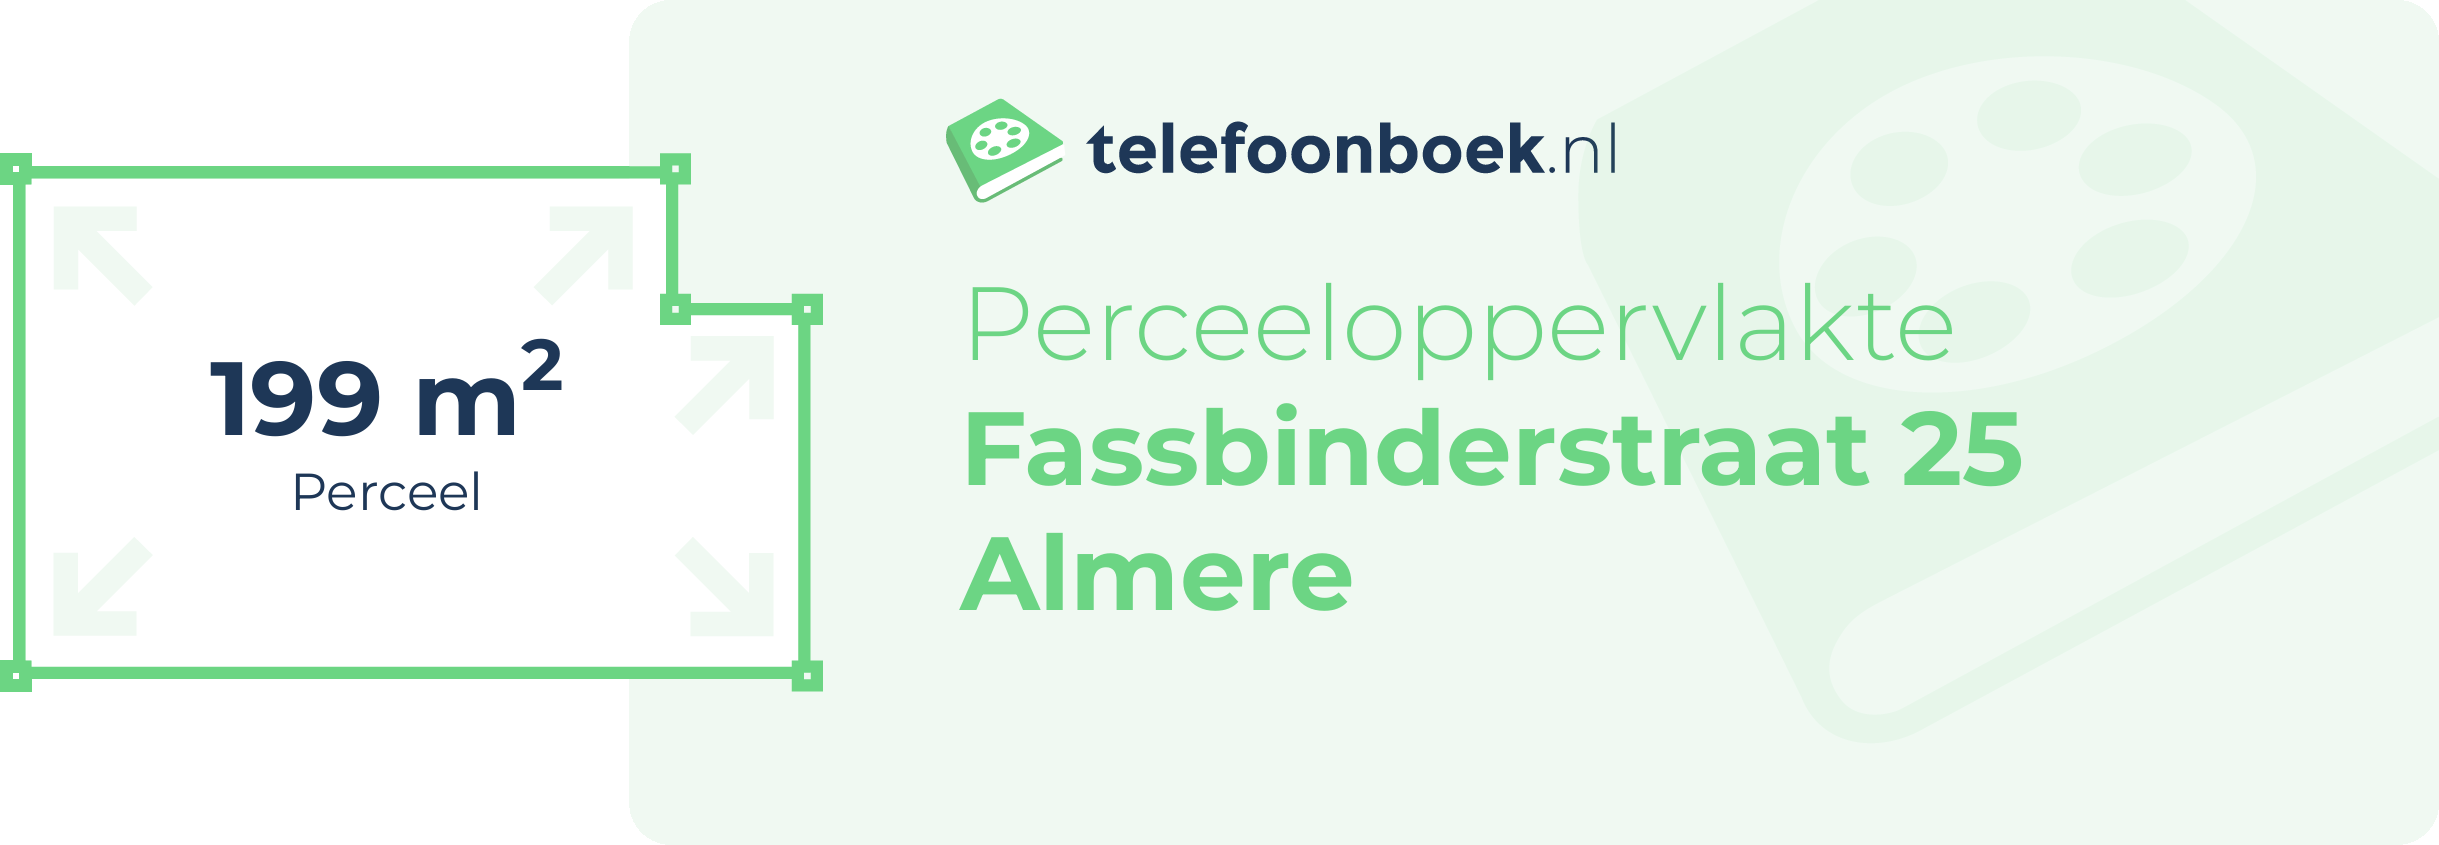 Perceeloppervlakte Fassbinderstraat 25 Almere